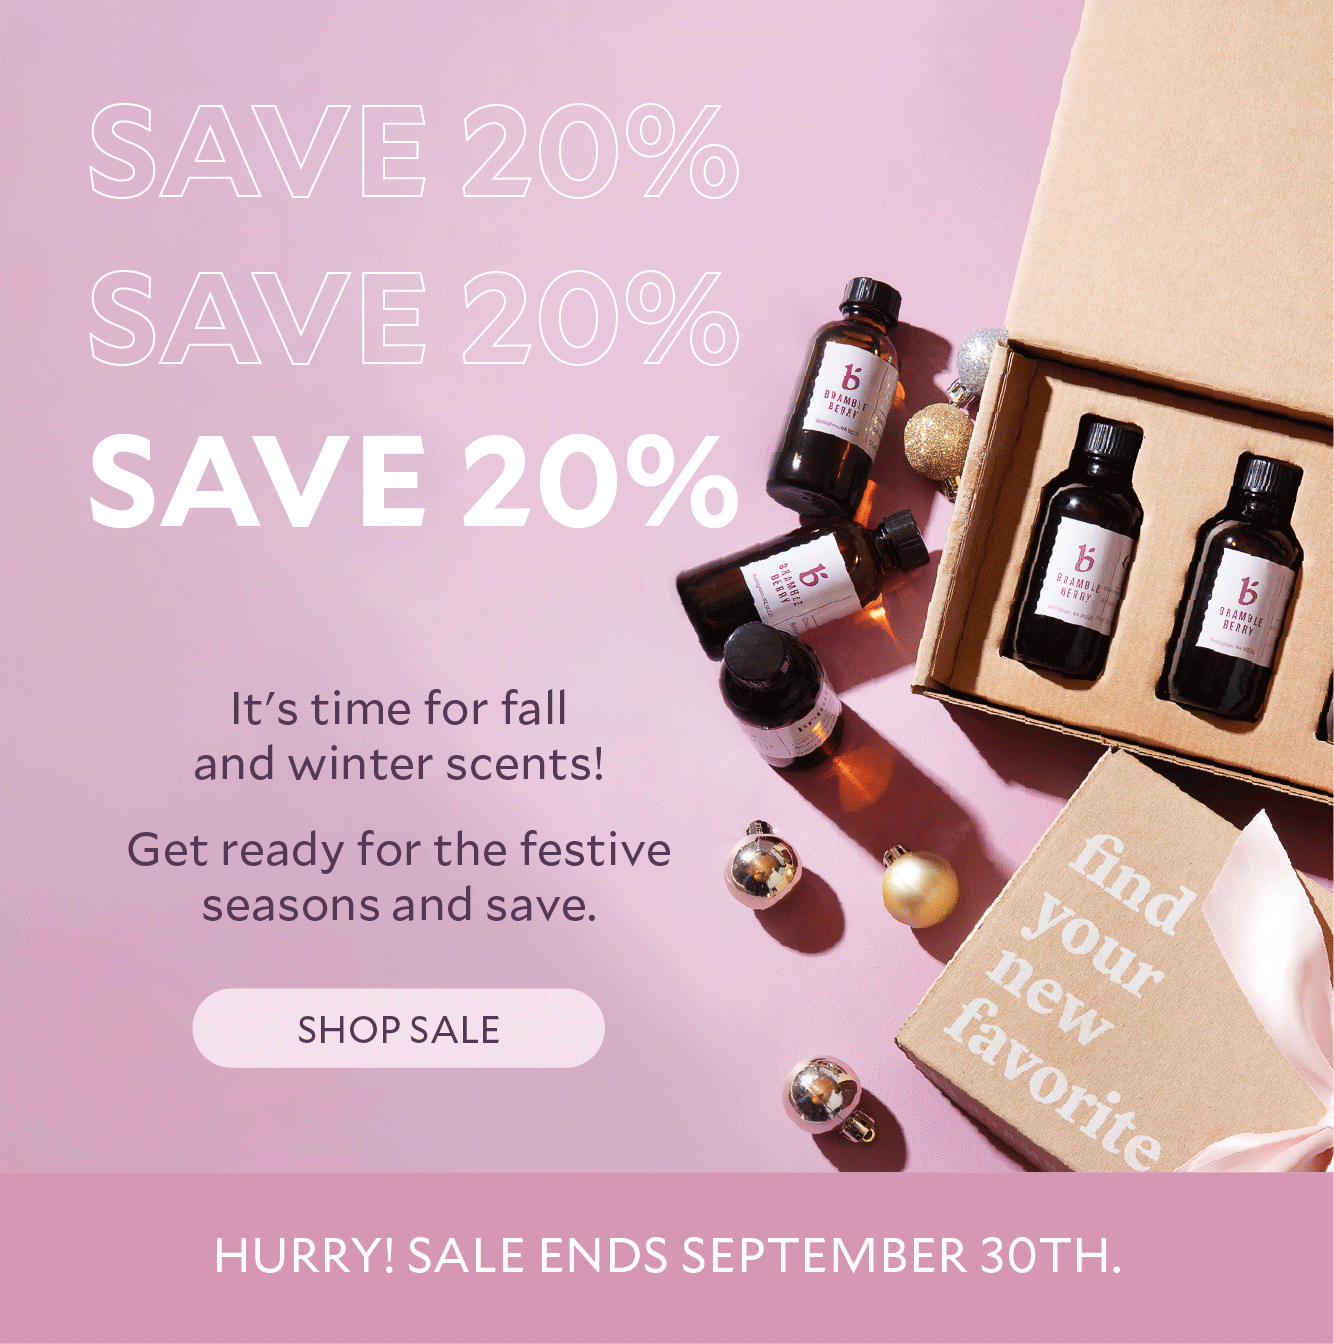 Save 20% on Fall Fragrances!